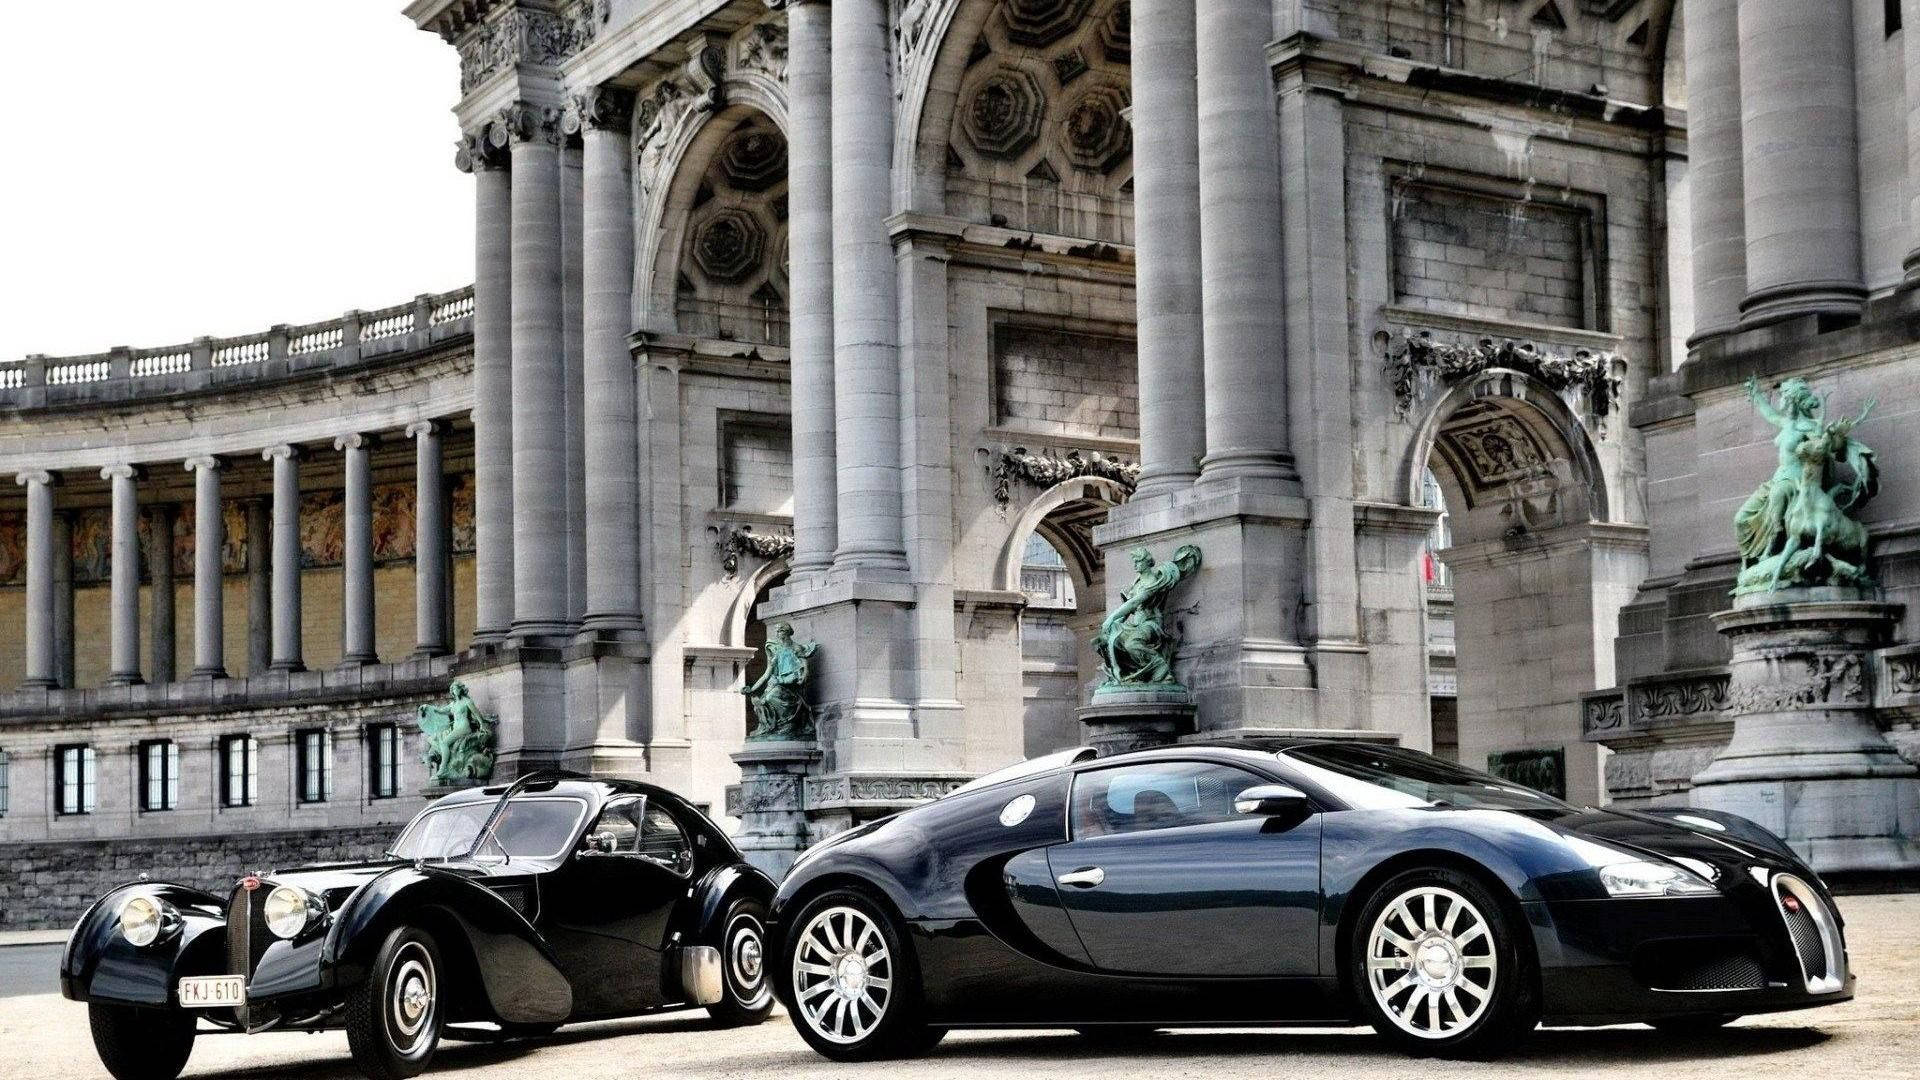 Bugatti 1920X1080 Wallpaper and Background Image